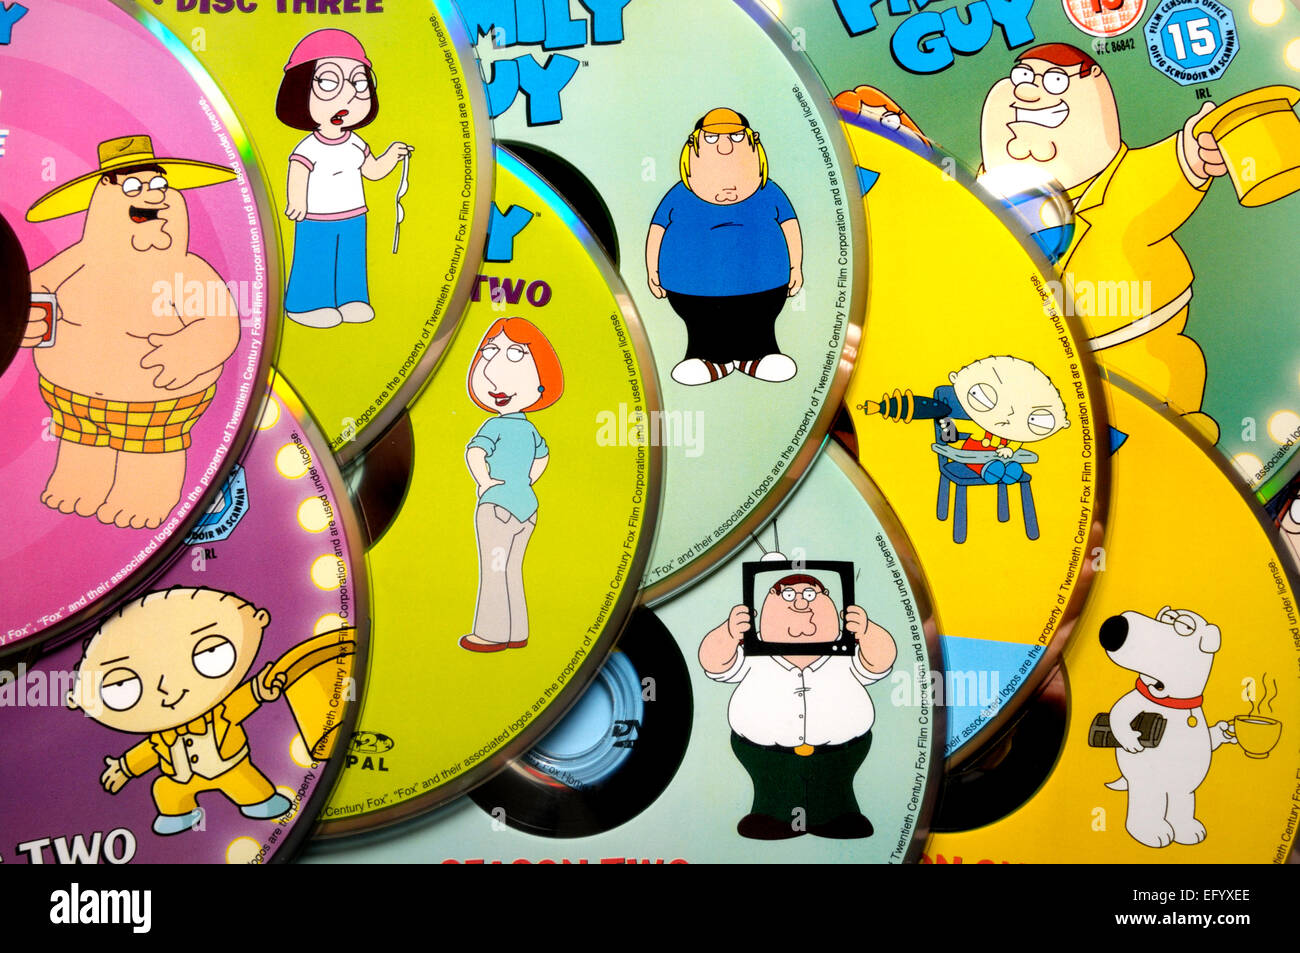 Family guy cartoon characters -Fotos und -Bildmaterial in hoher Auflösung –  Alamy